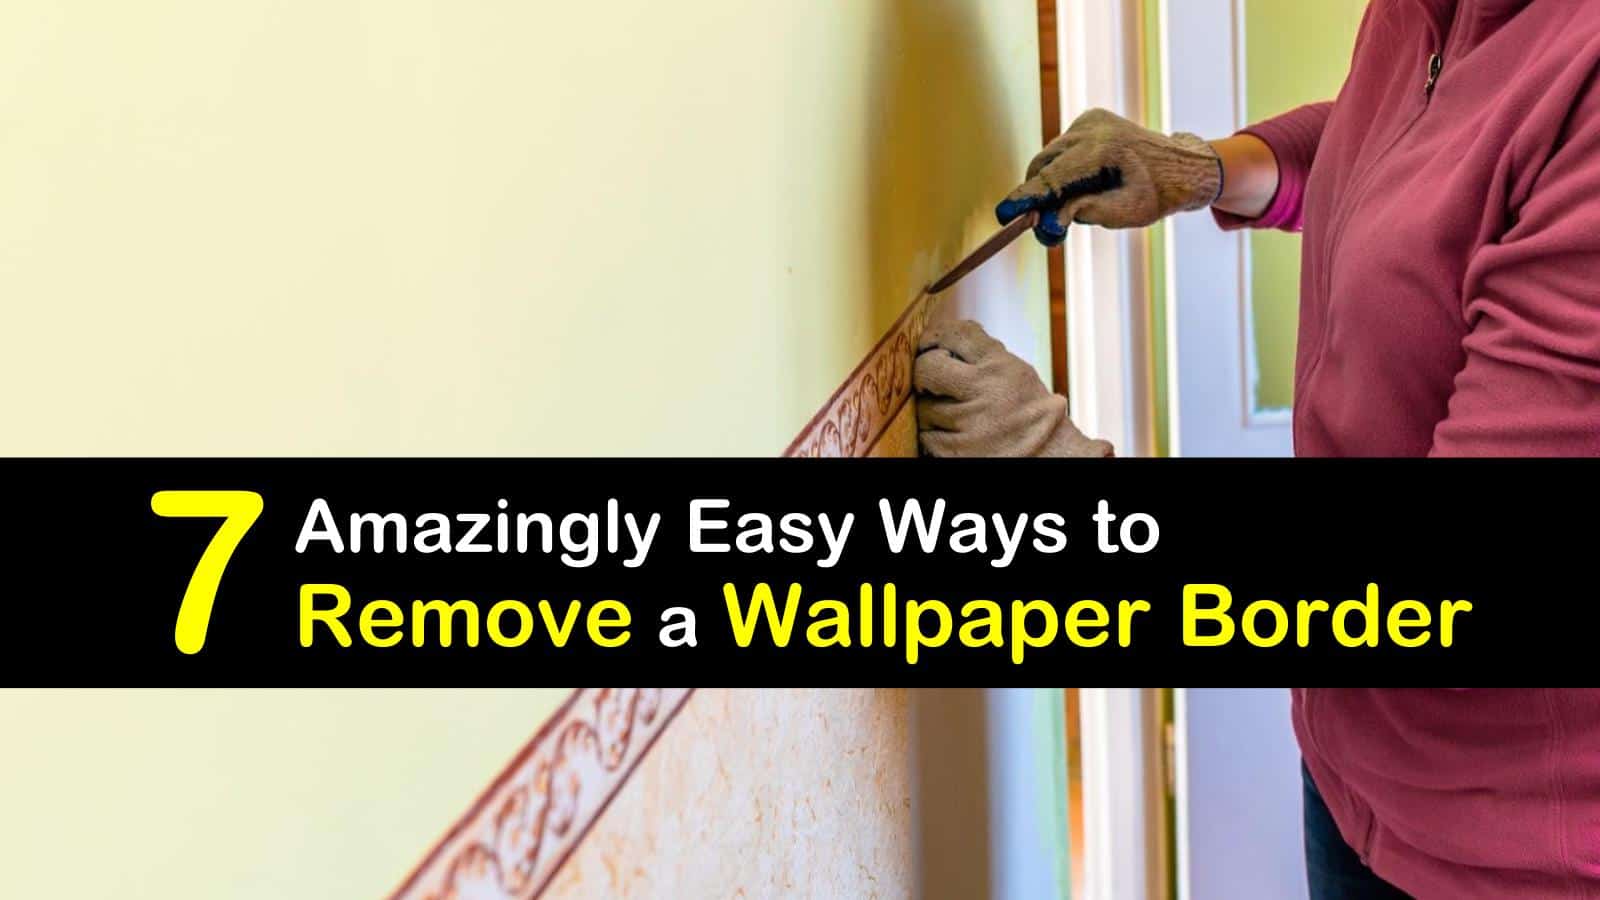 Taking Wallpaper Off Plasterboard - carrotapp